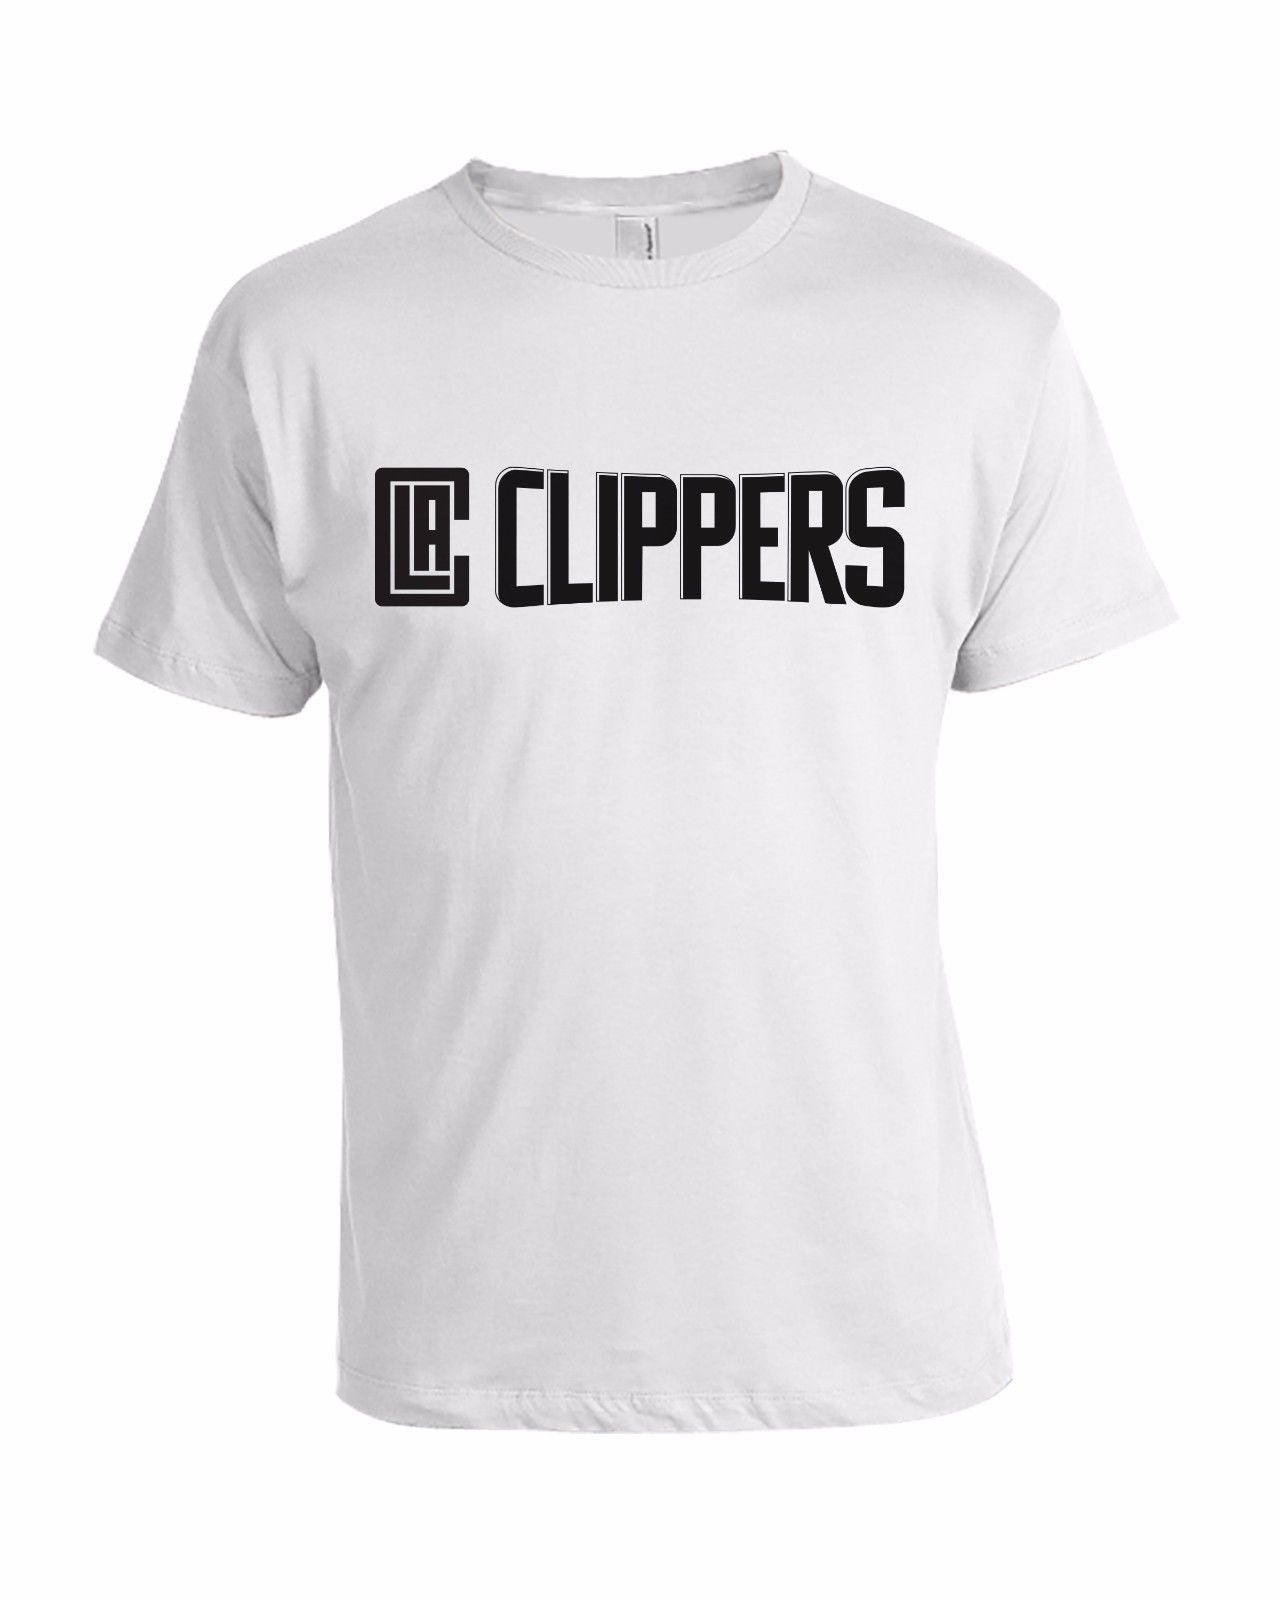 Los Angeles Clippers side logo Black Print Team Shirt NBA jersey shirt